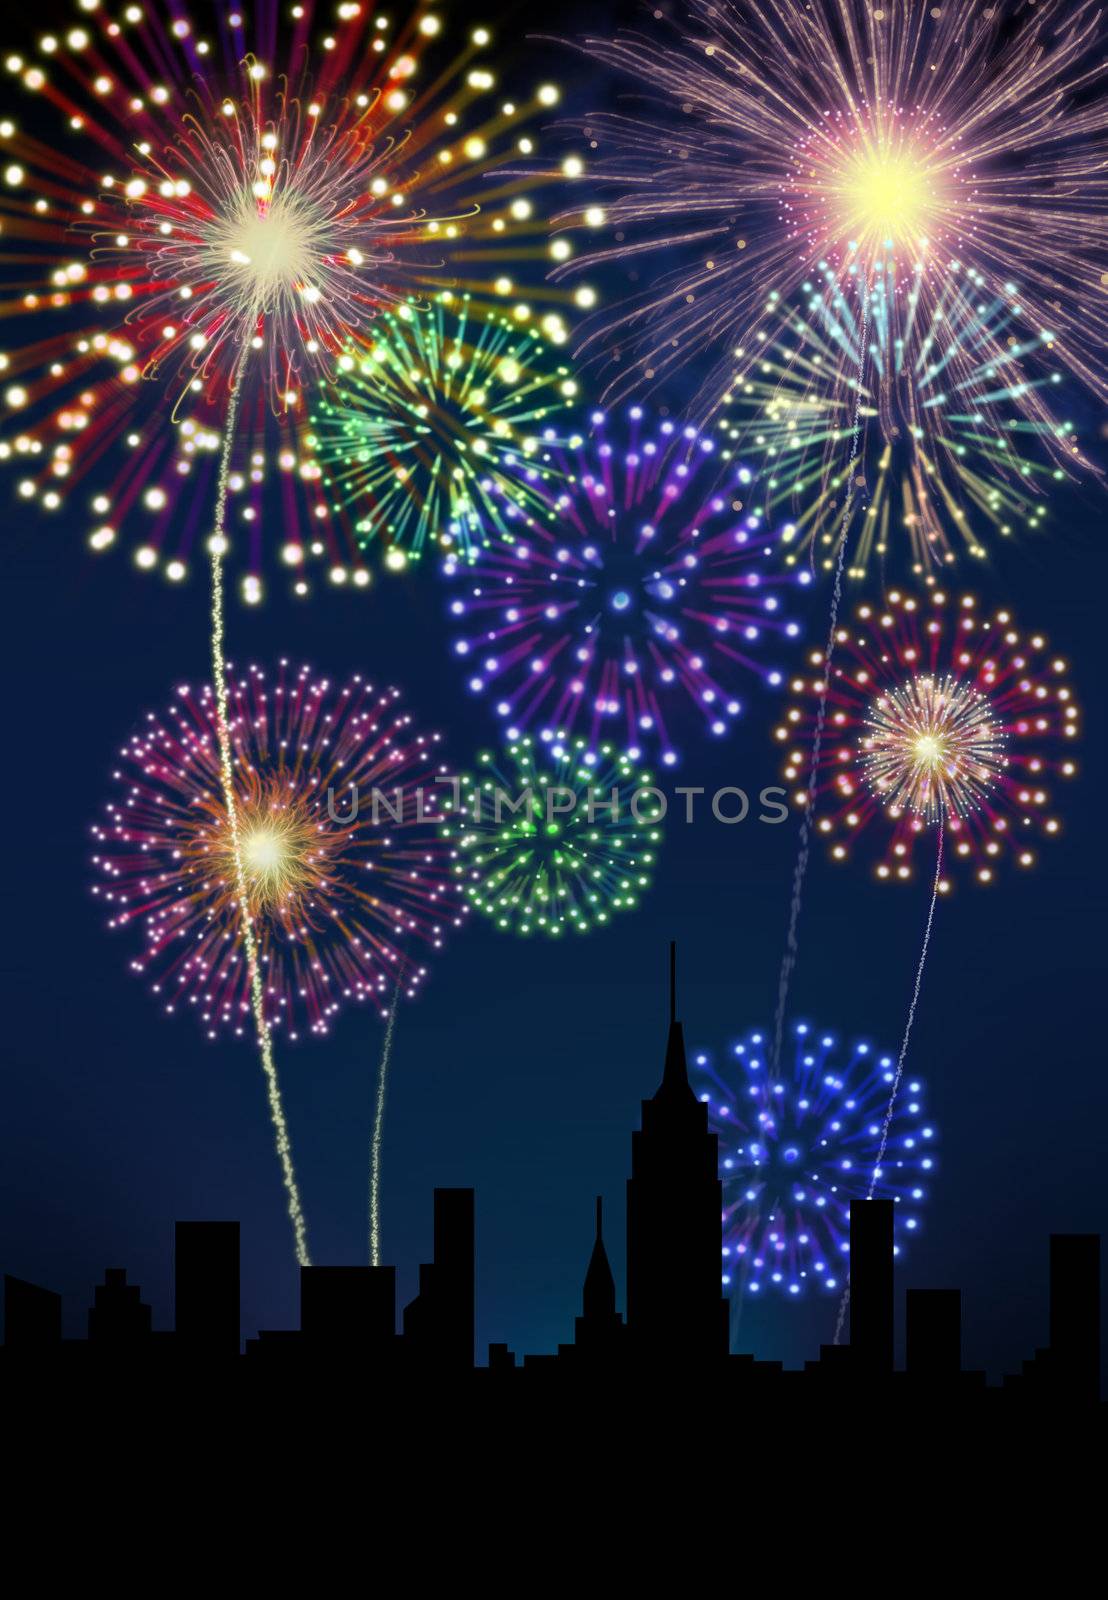 Fireworks happy New year siluette city night scene.